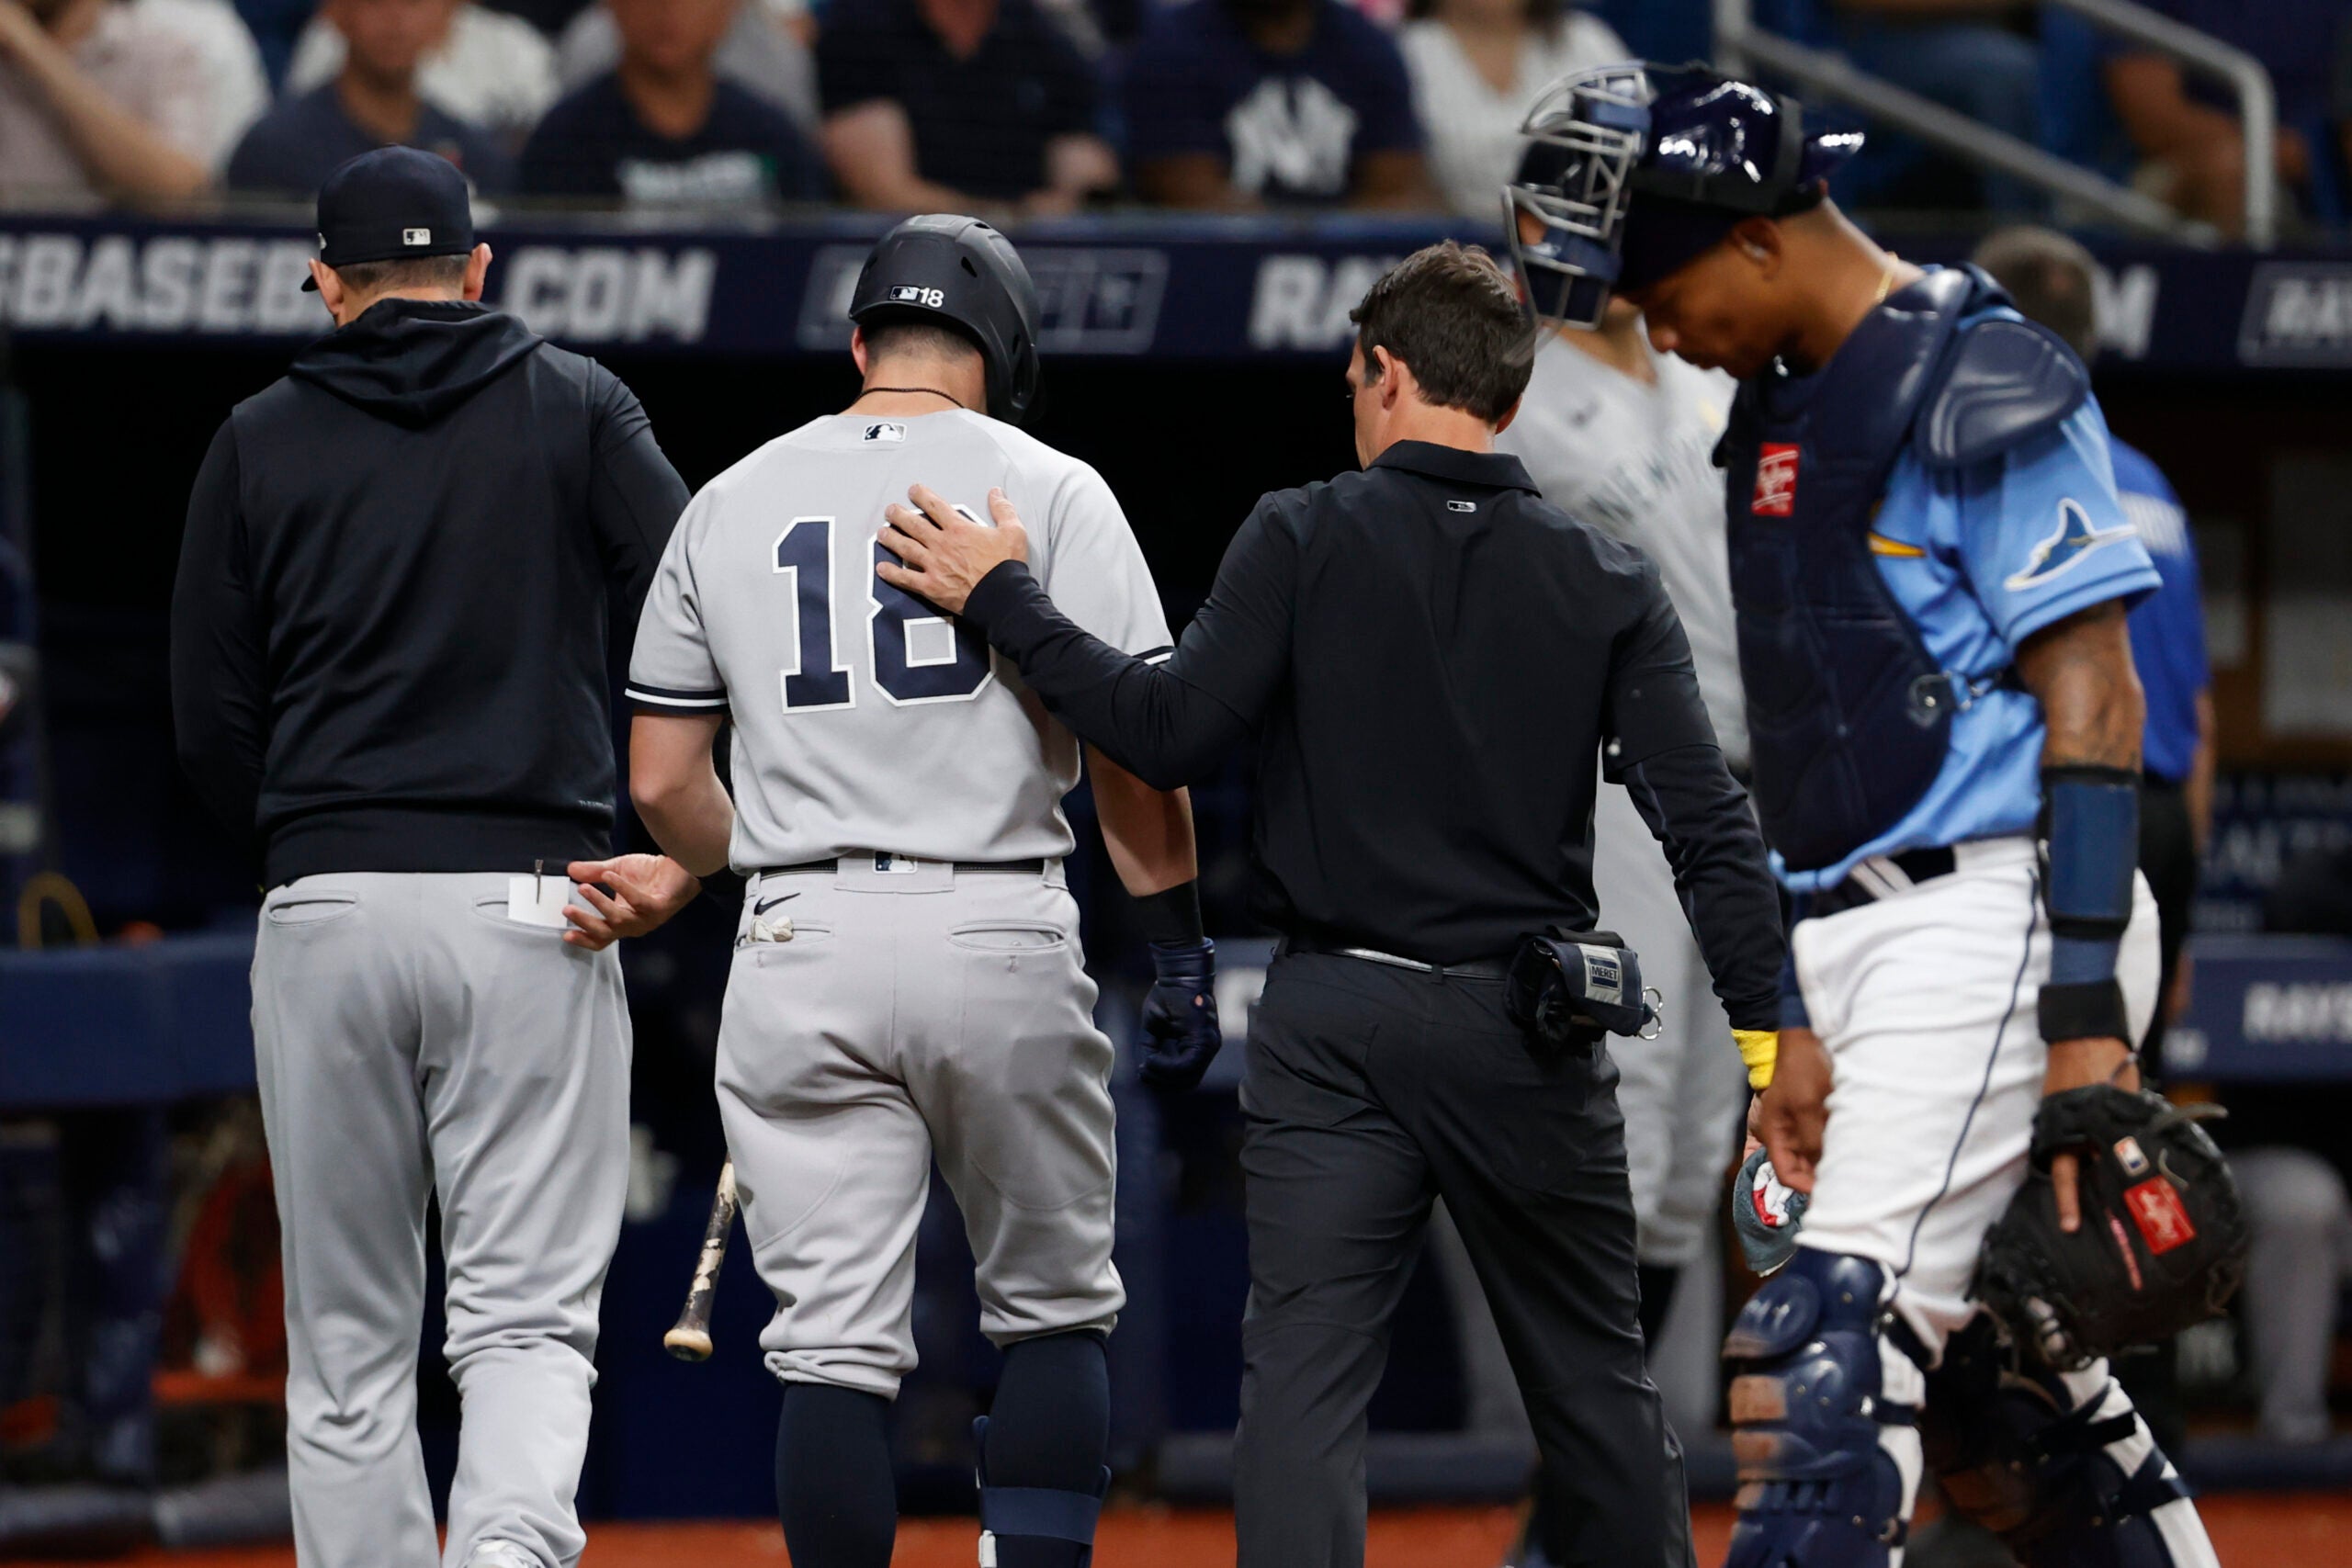 Yankees' Andrew Benintendi having wrist surgery, could play this year